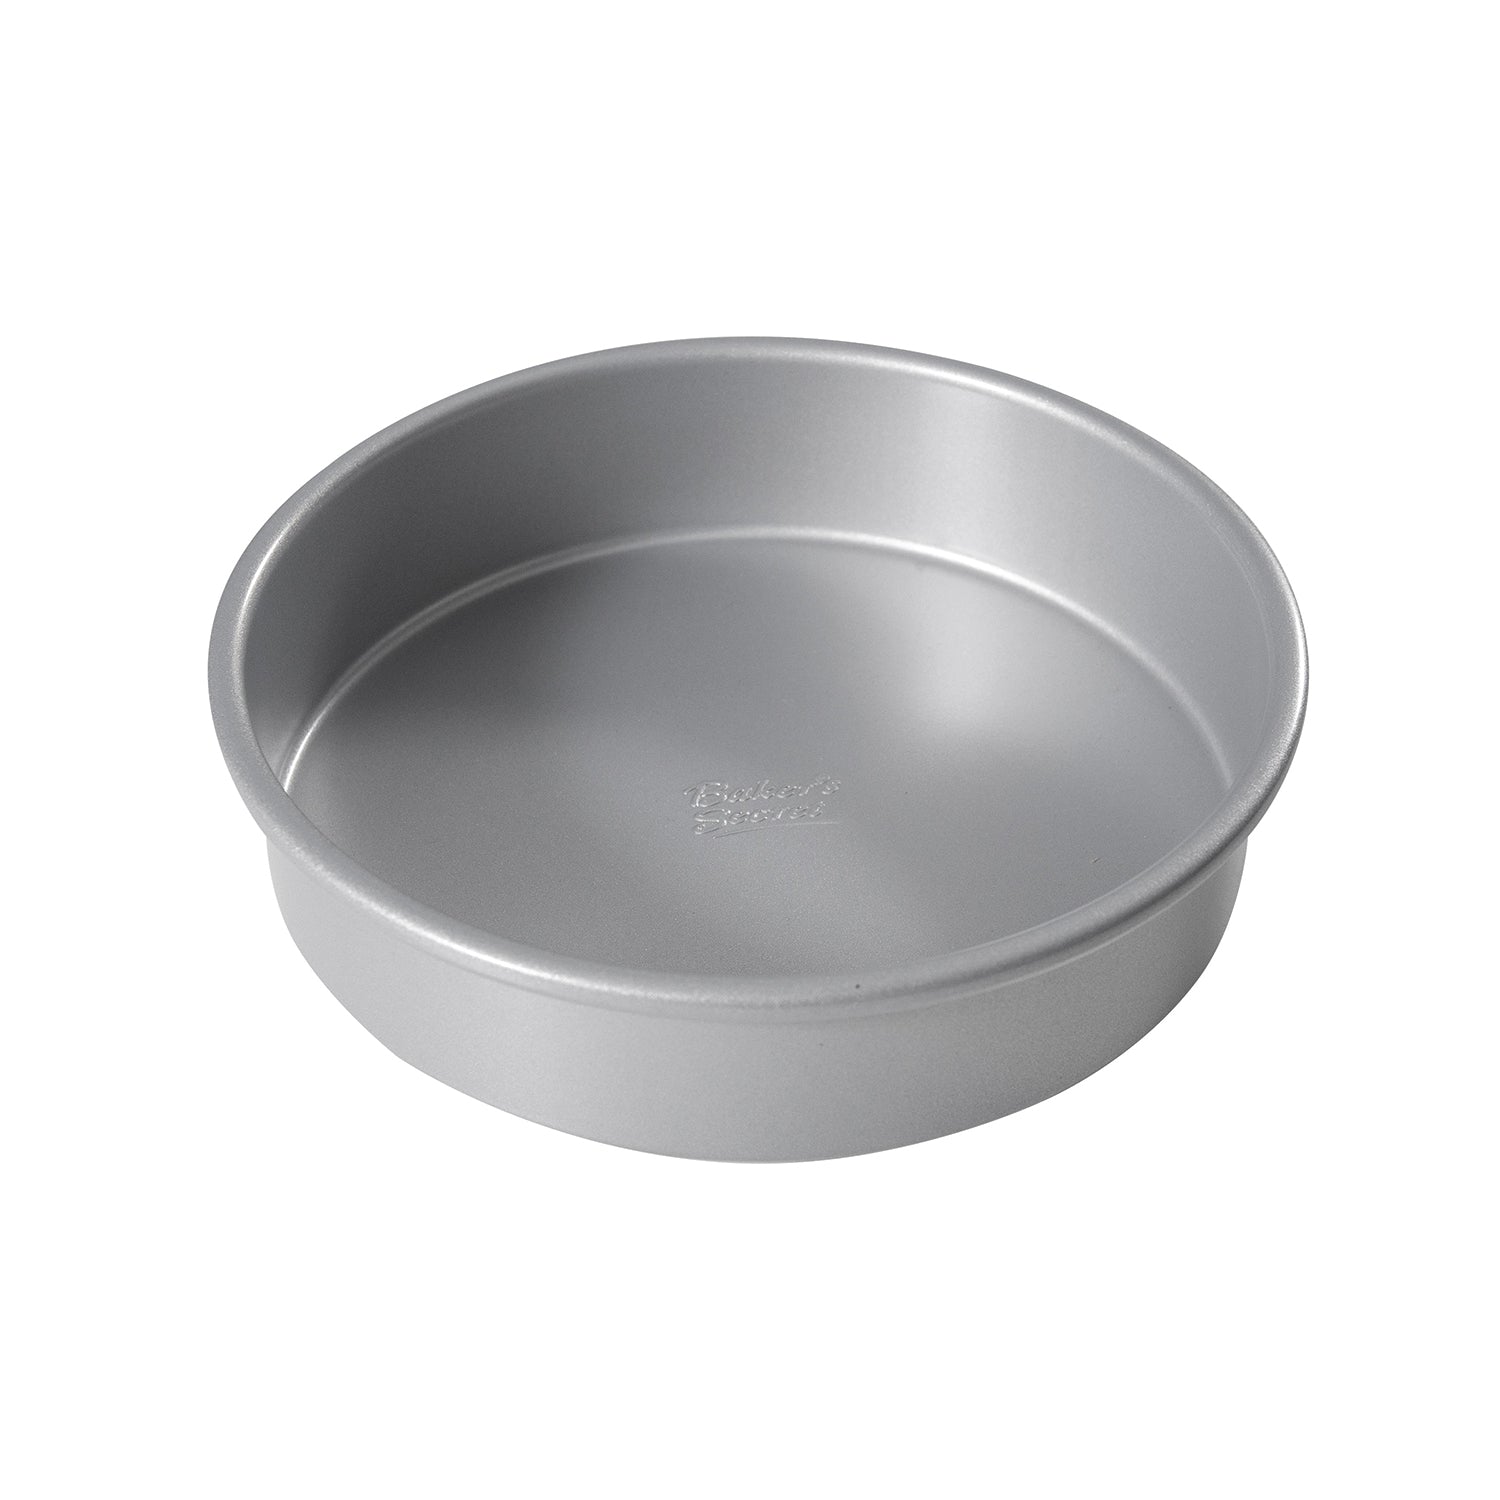 O'lala Non-Stick Round Baking Pan, 24cm